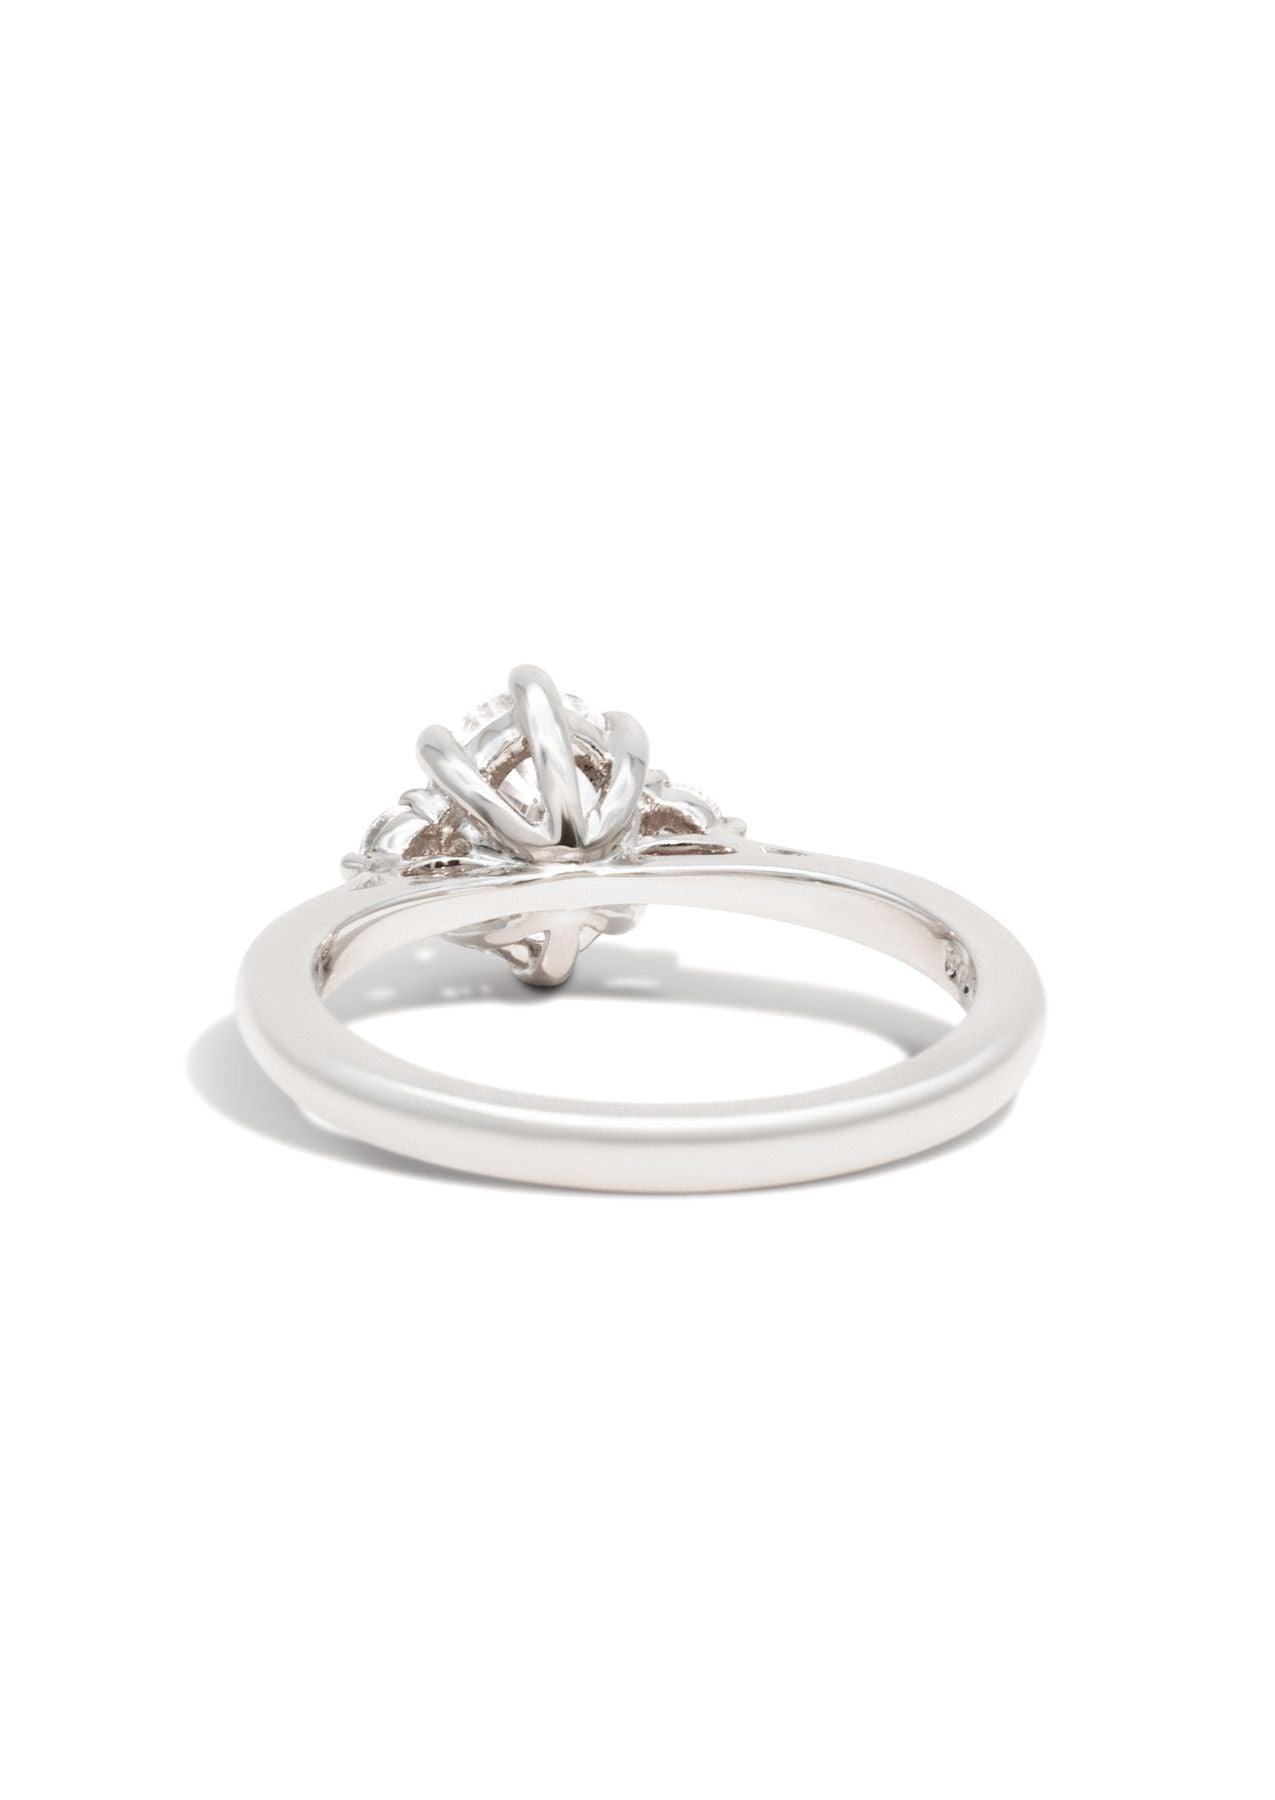 The Esme White Gold Cultured Diamond Ring